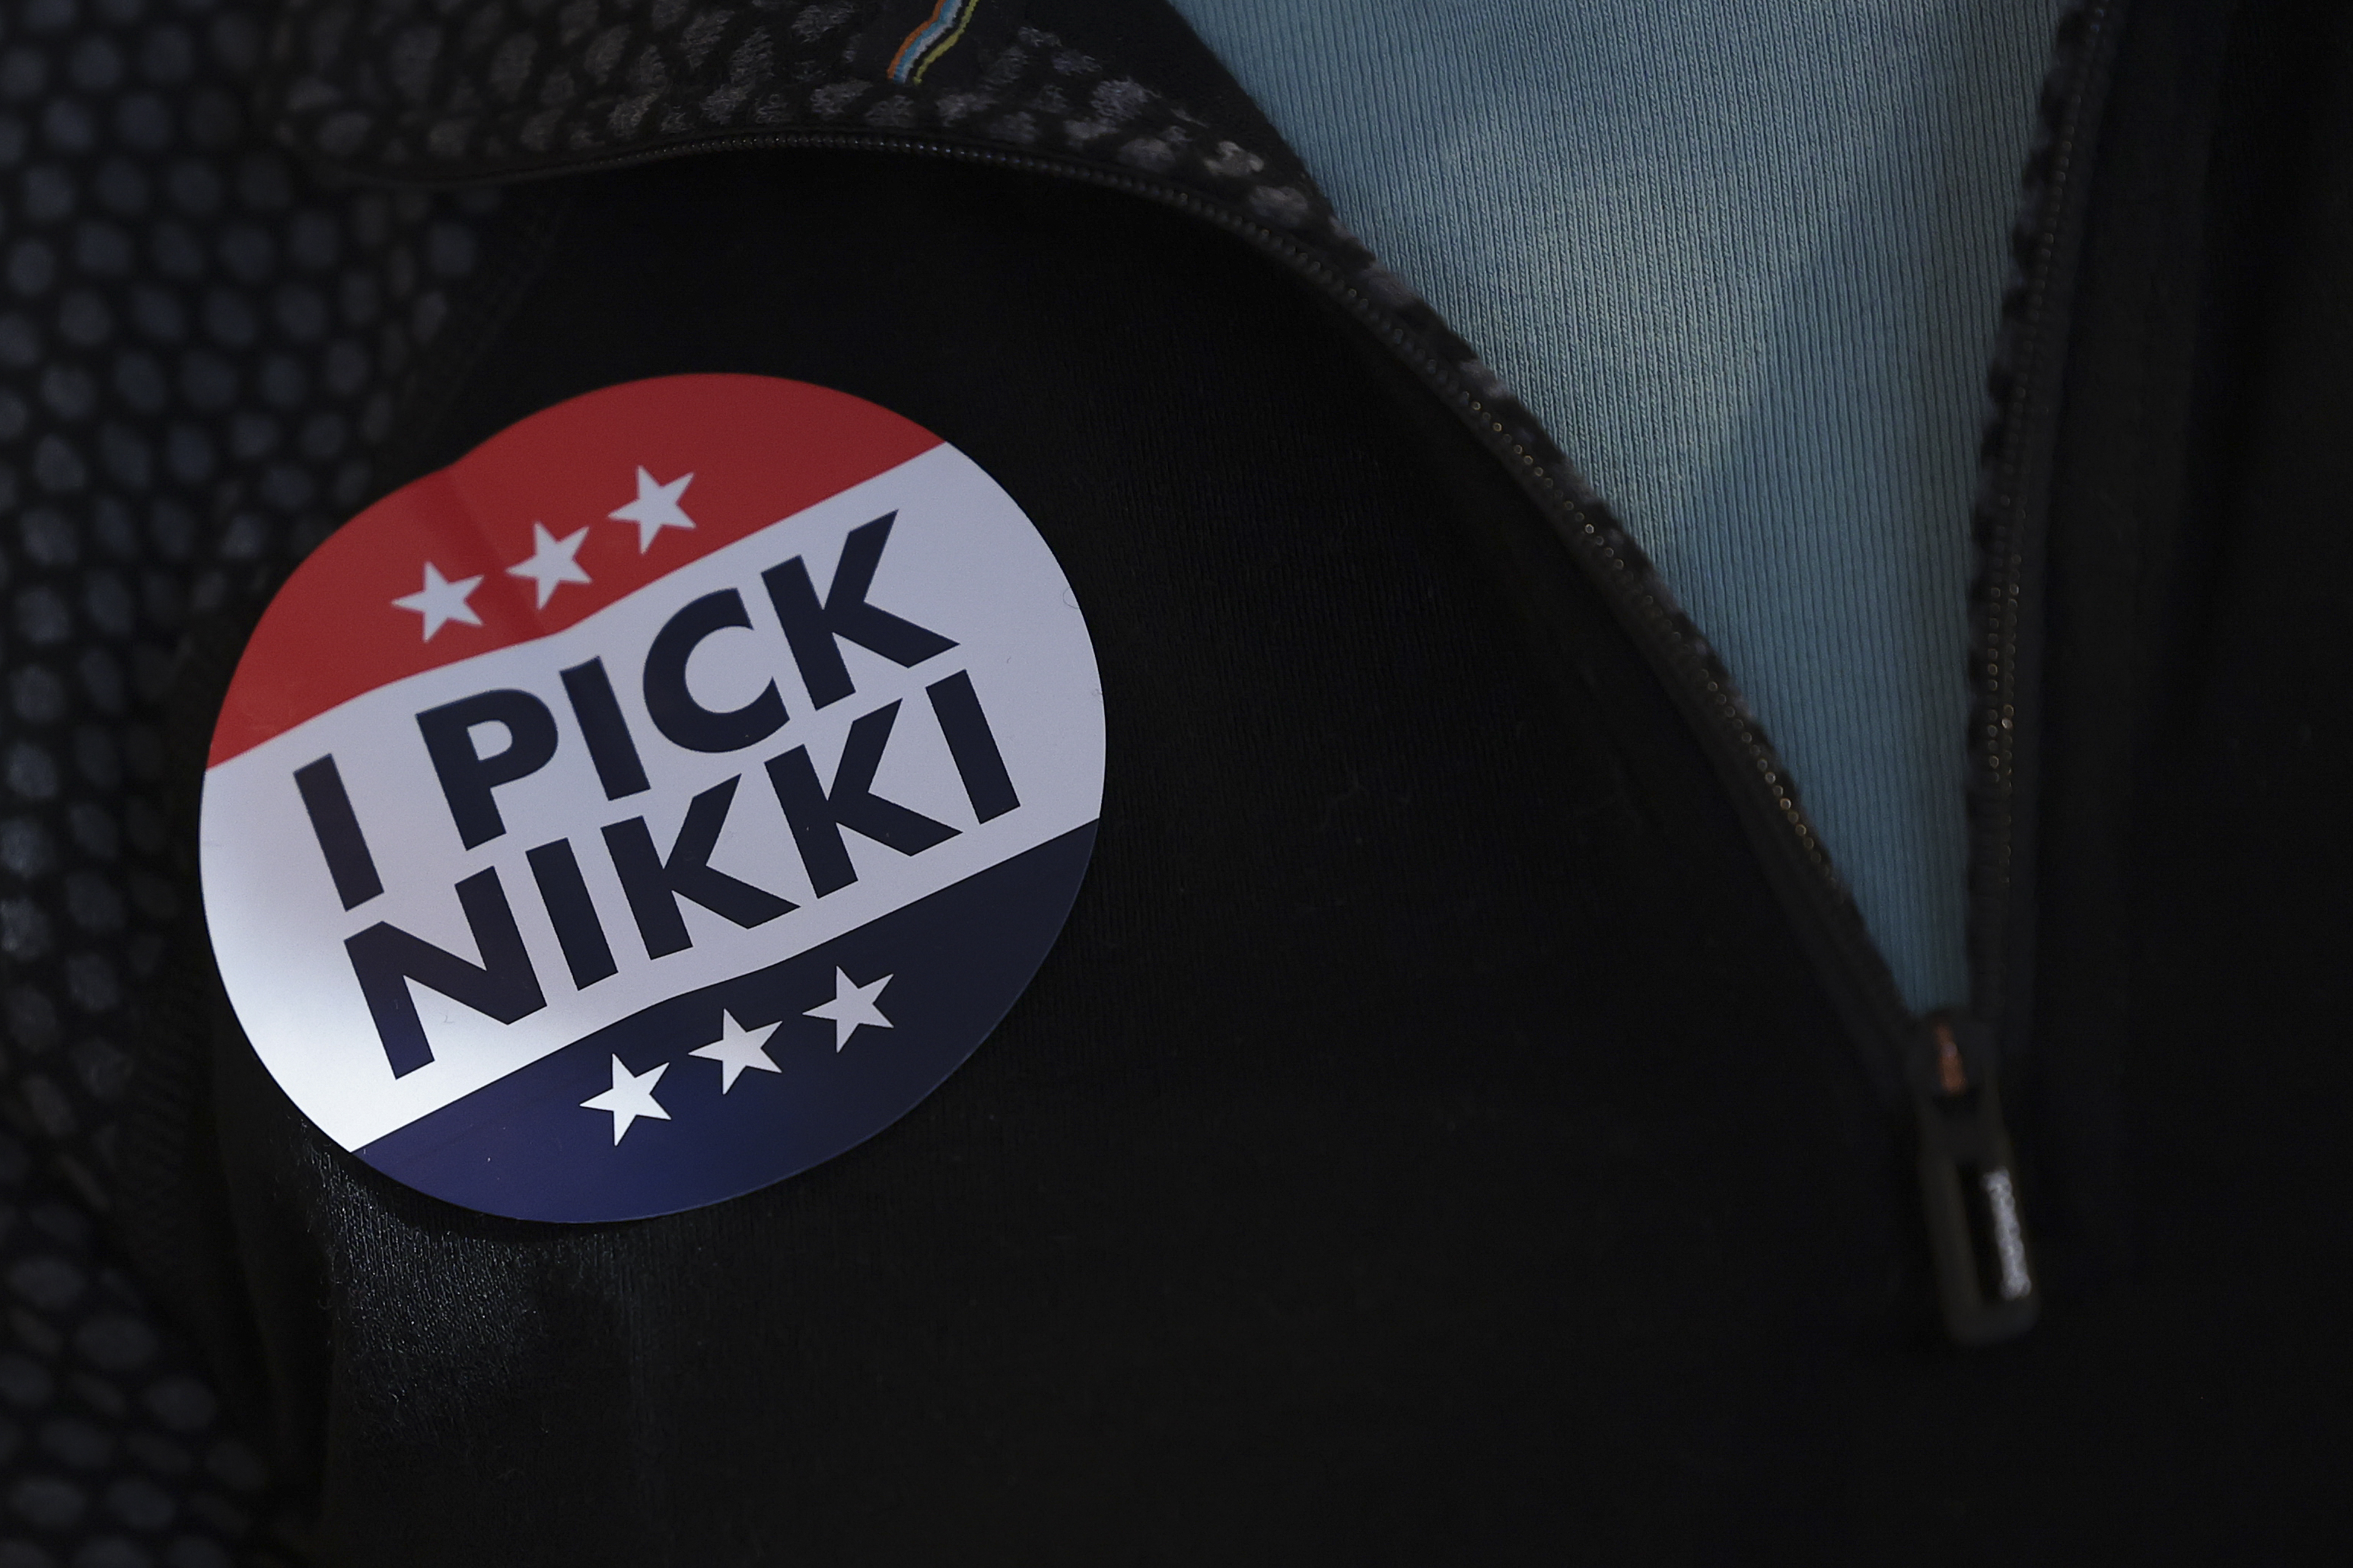 An &quot;I Pick Nikki&quot; button